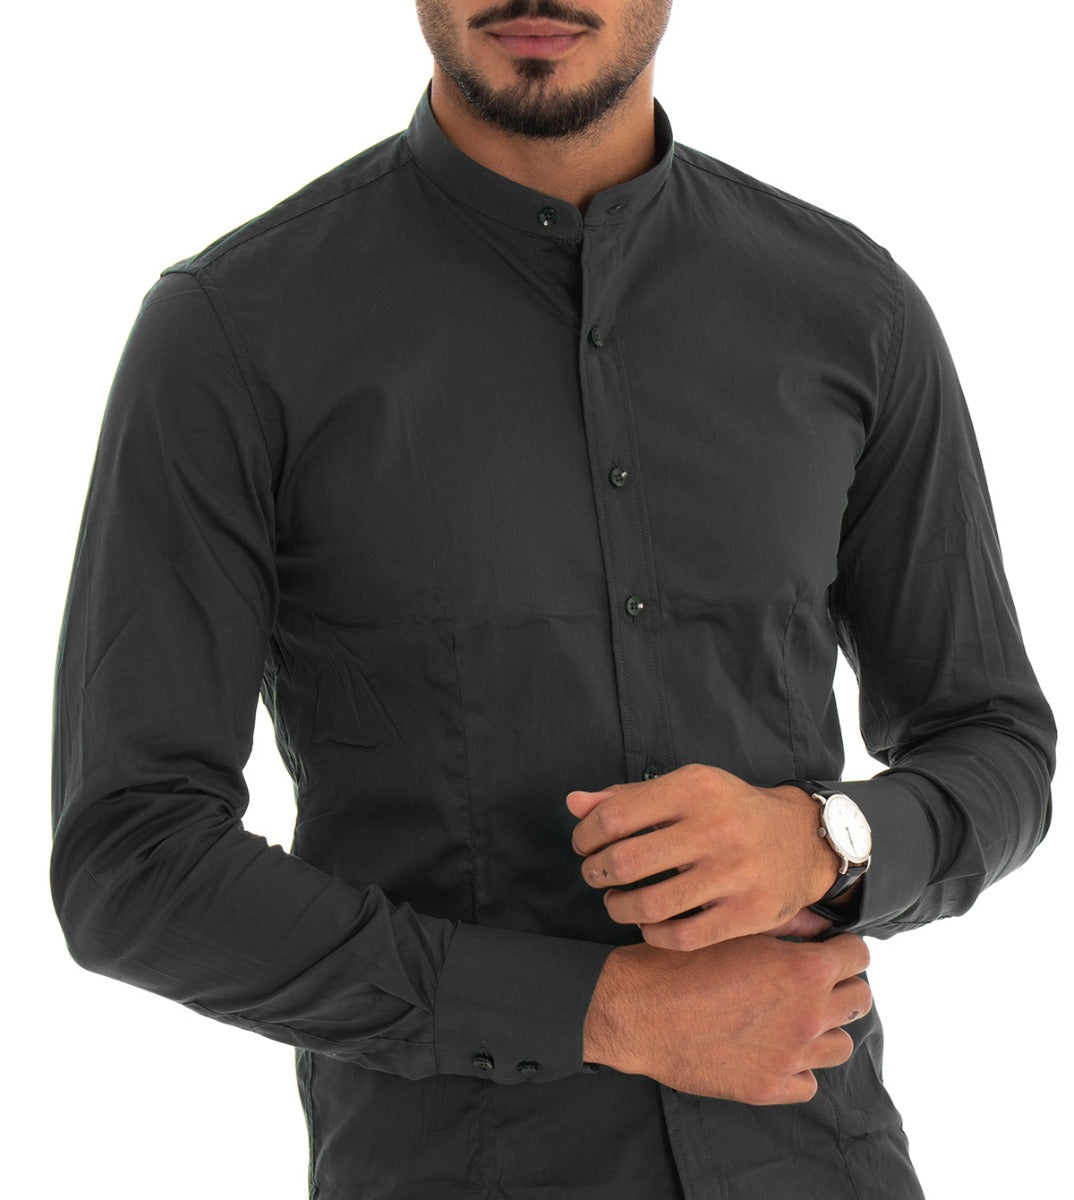 Men's Mandarin Collar Shirt Long Sleeve Slim Fit Basic Casual Black Cotton GIOSAL-C1820A